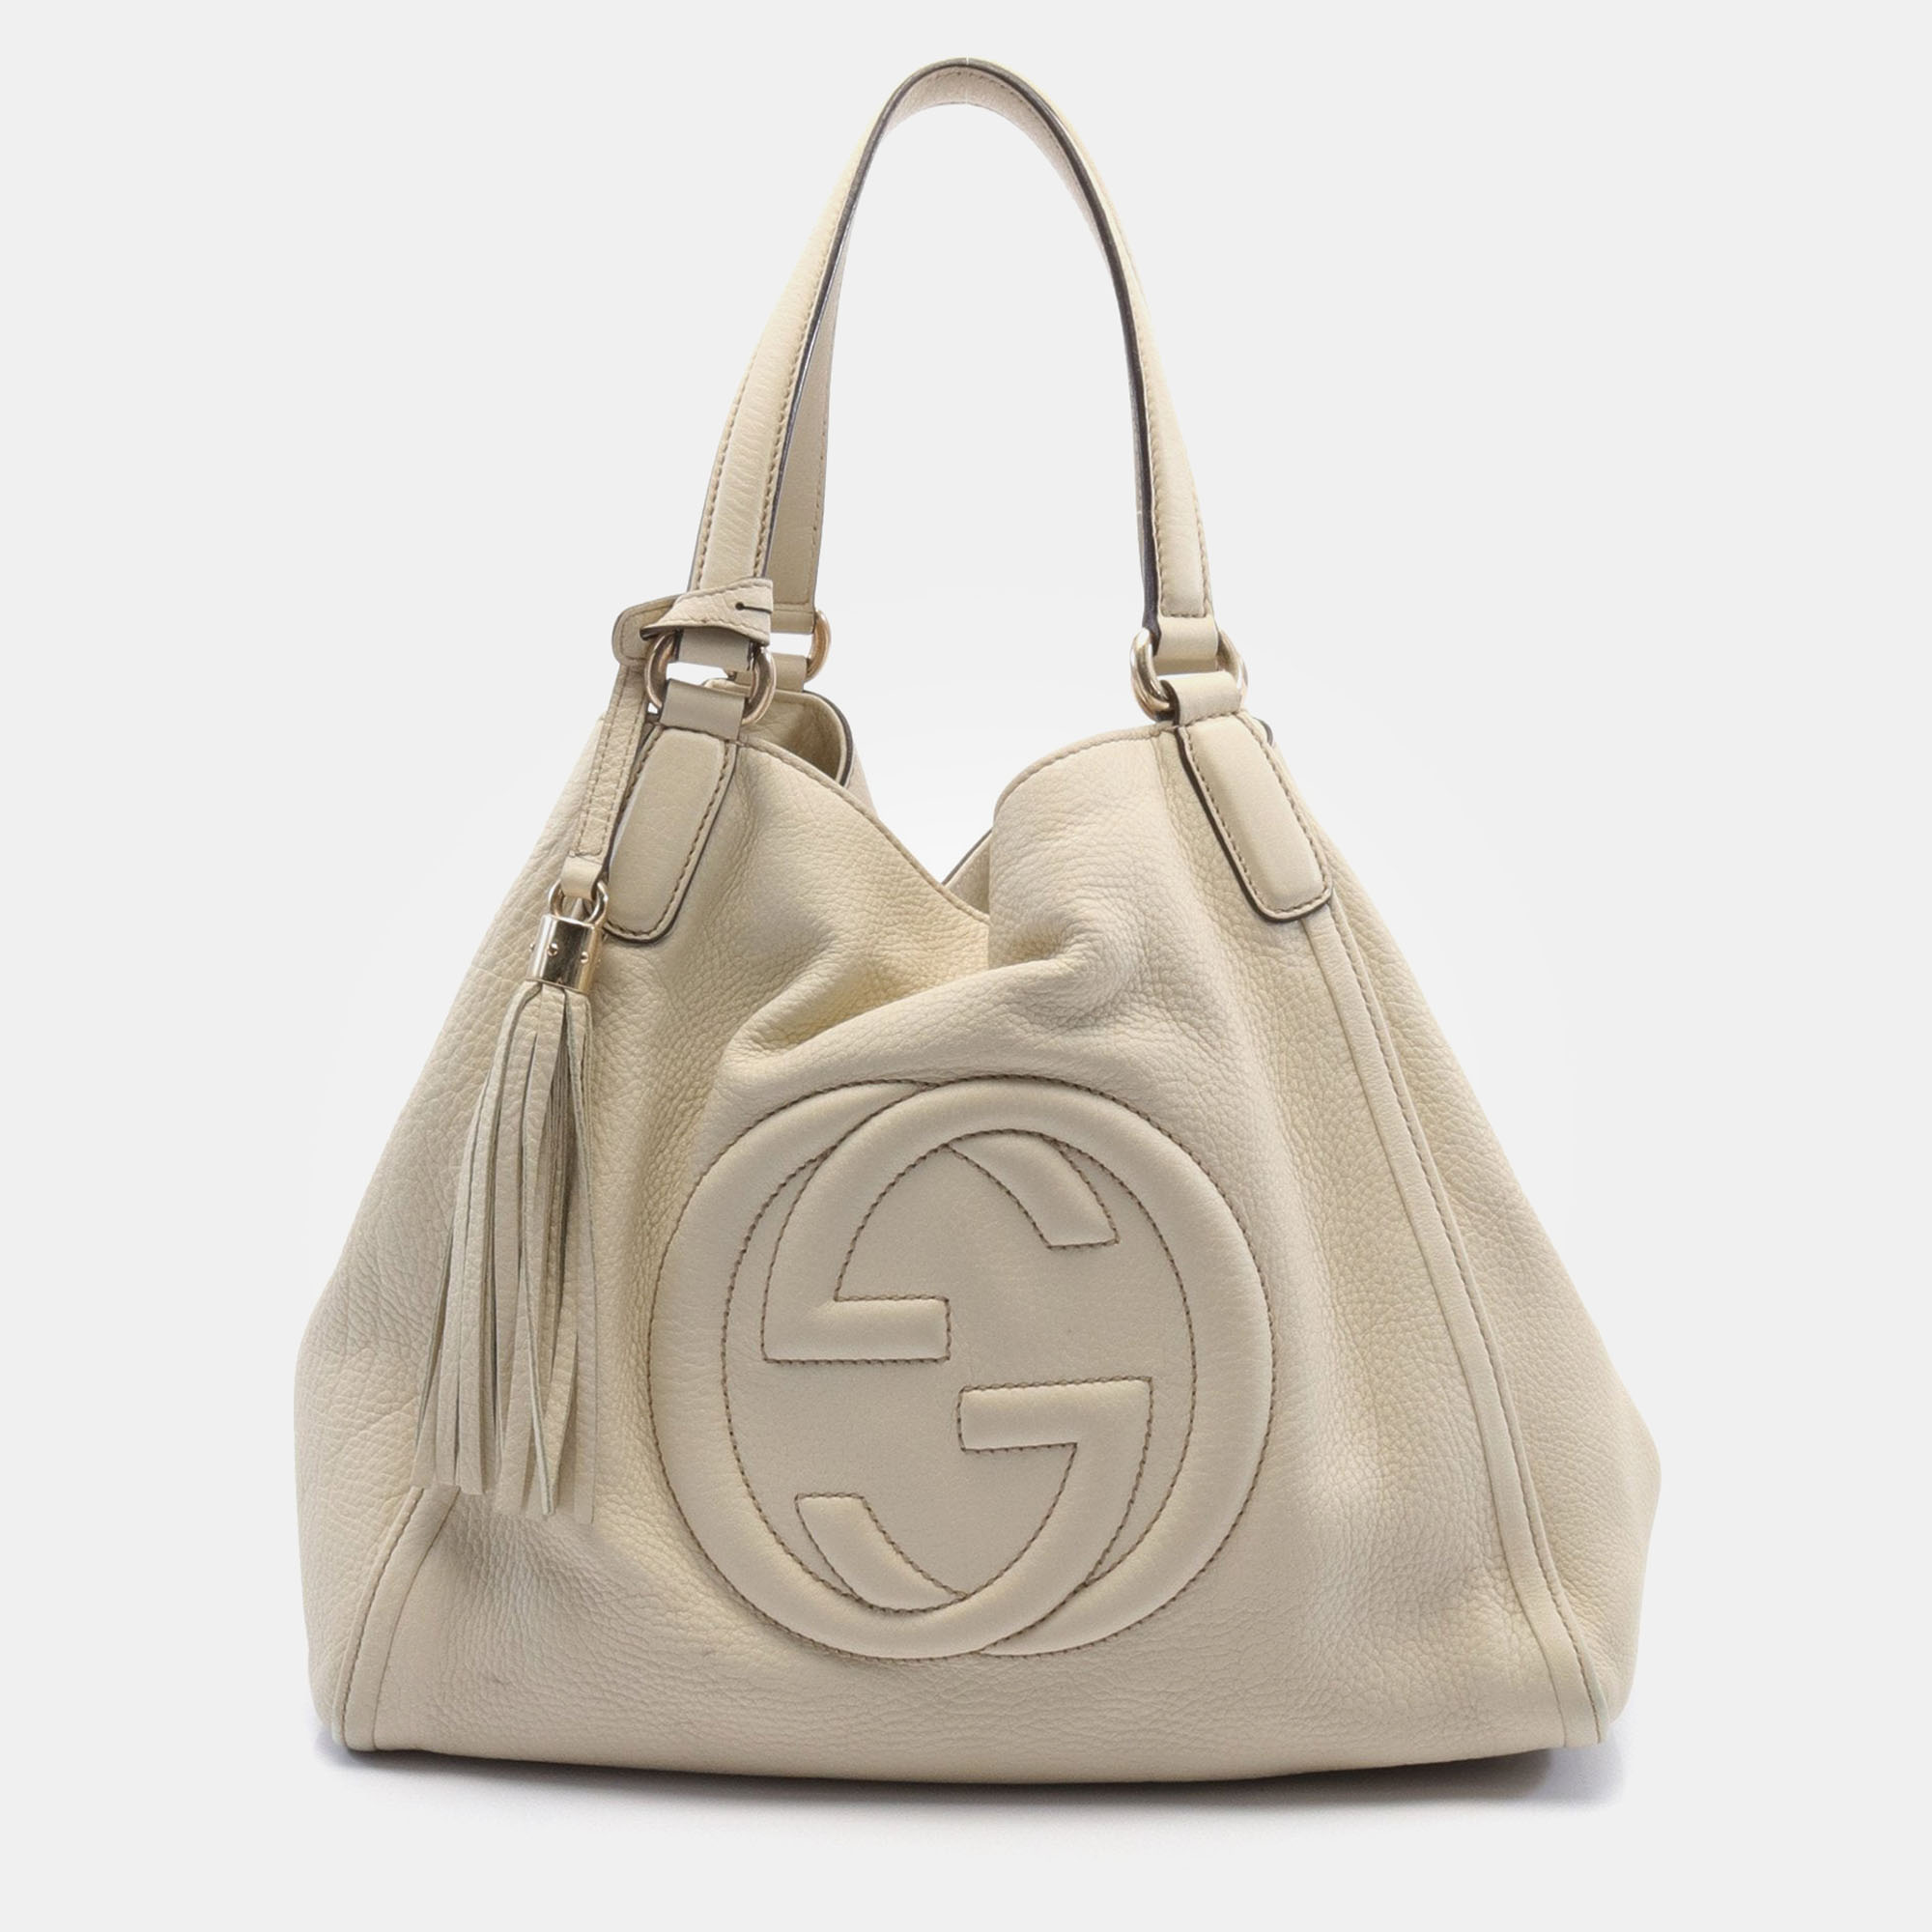 Gucci soho cellarius interlocking g handbag tote bag leather off white